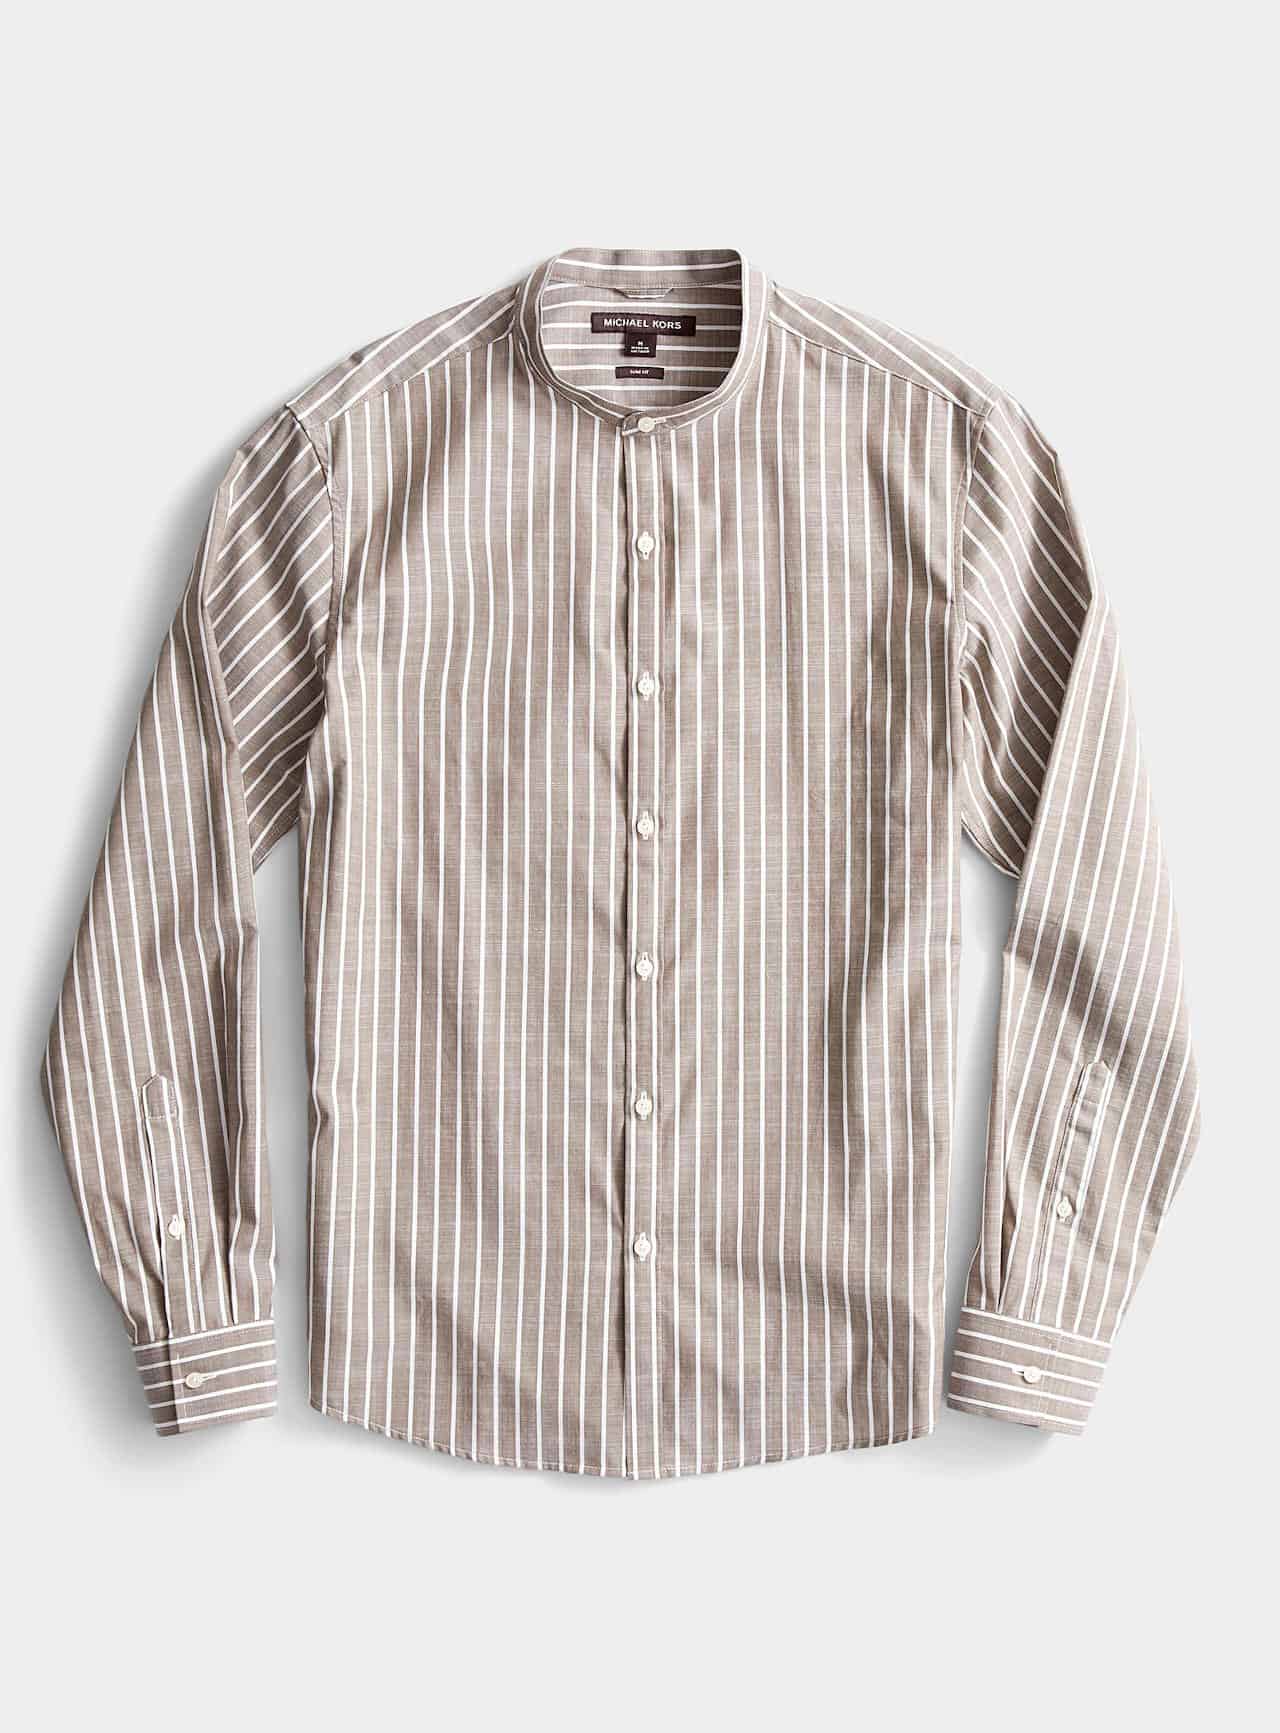 Men's beige striped shirt image flat